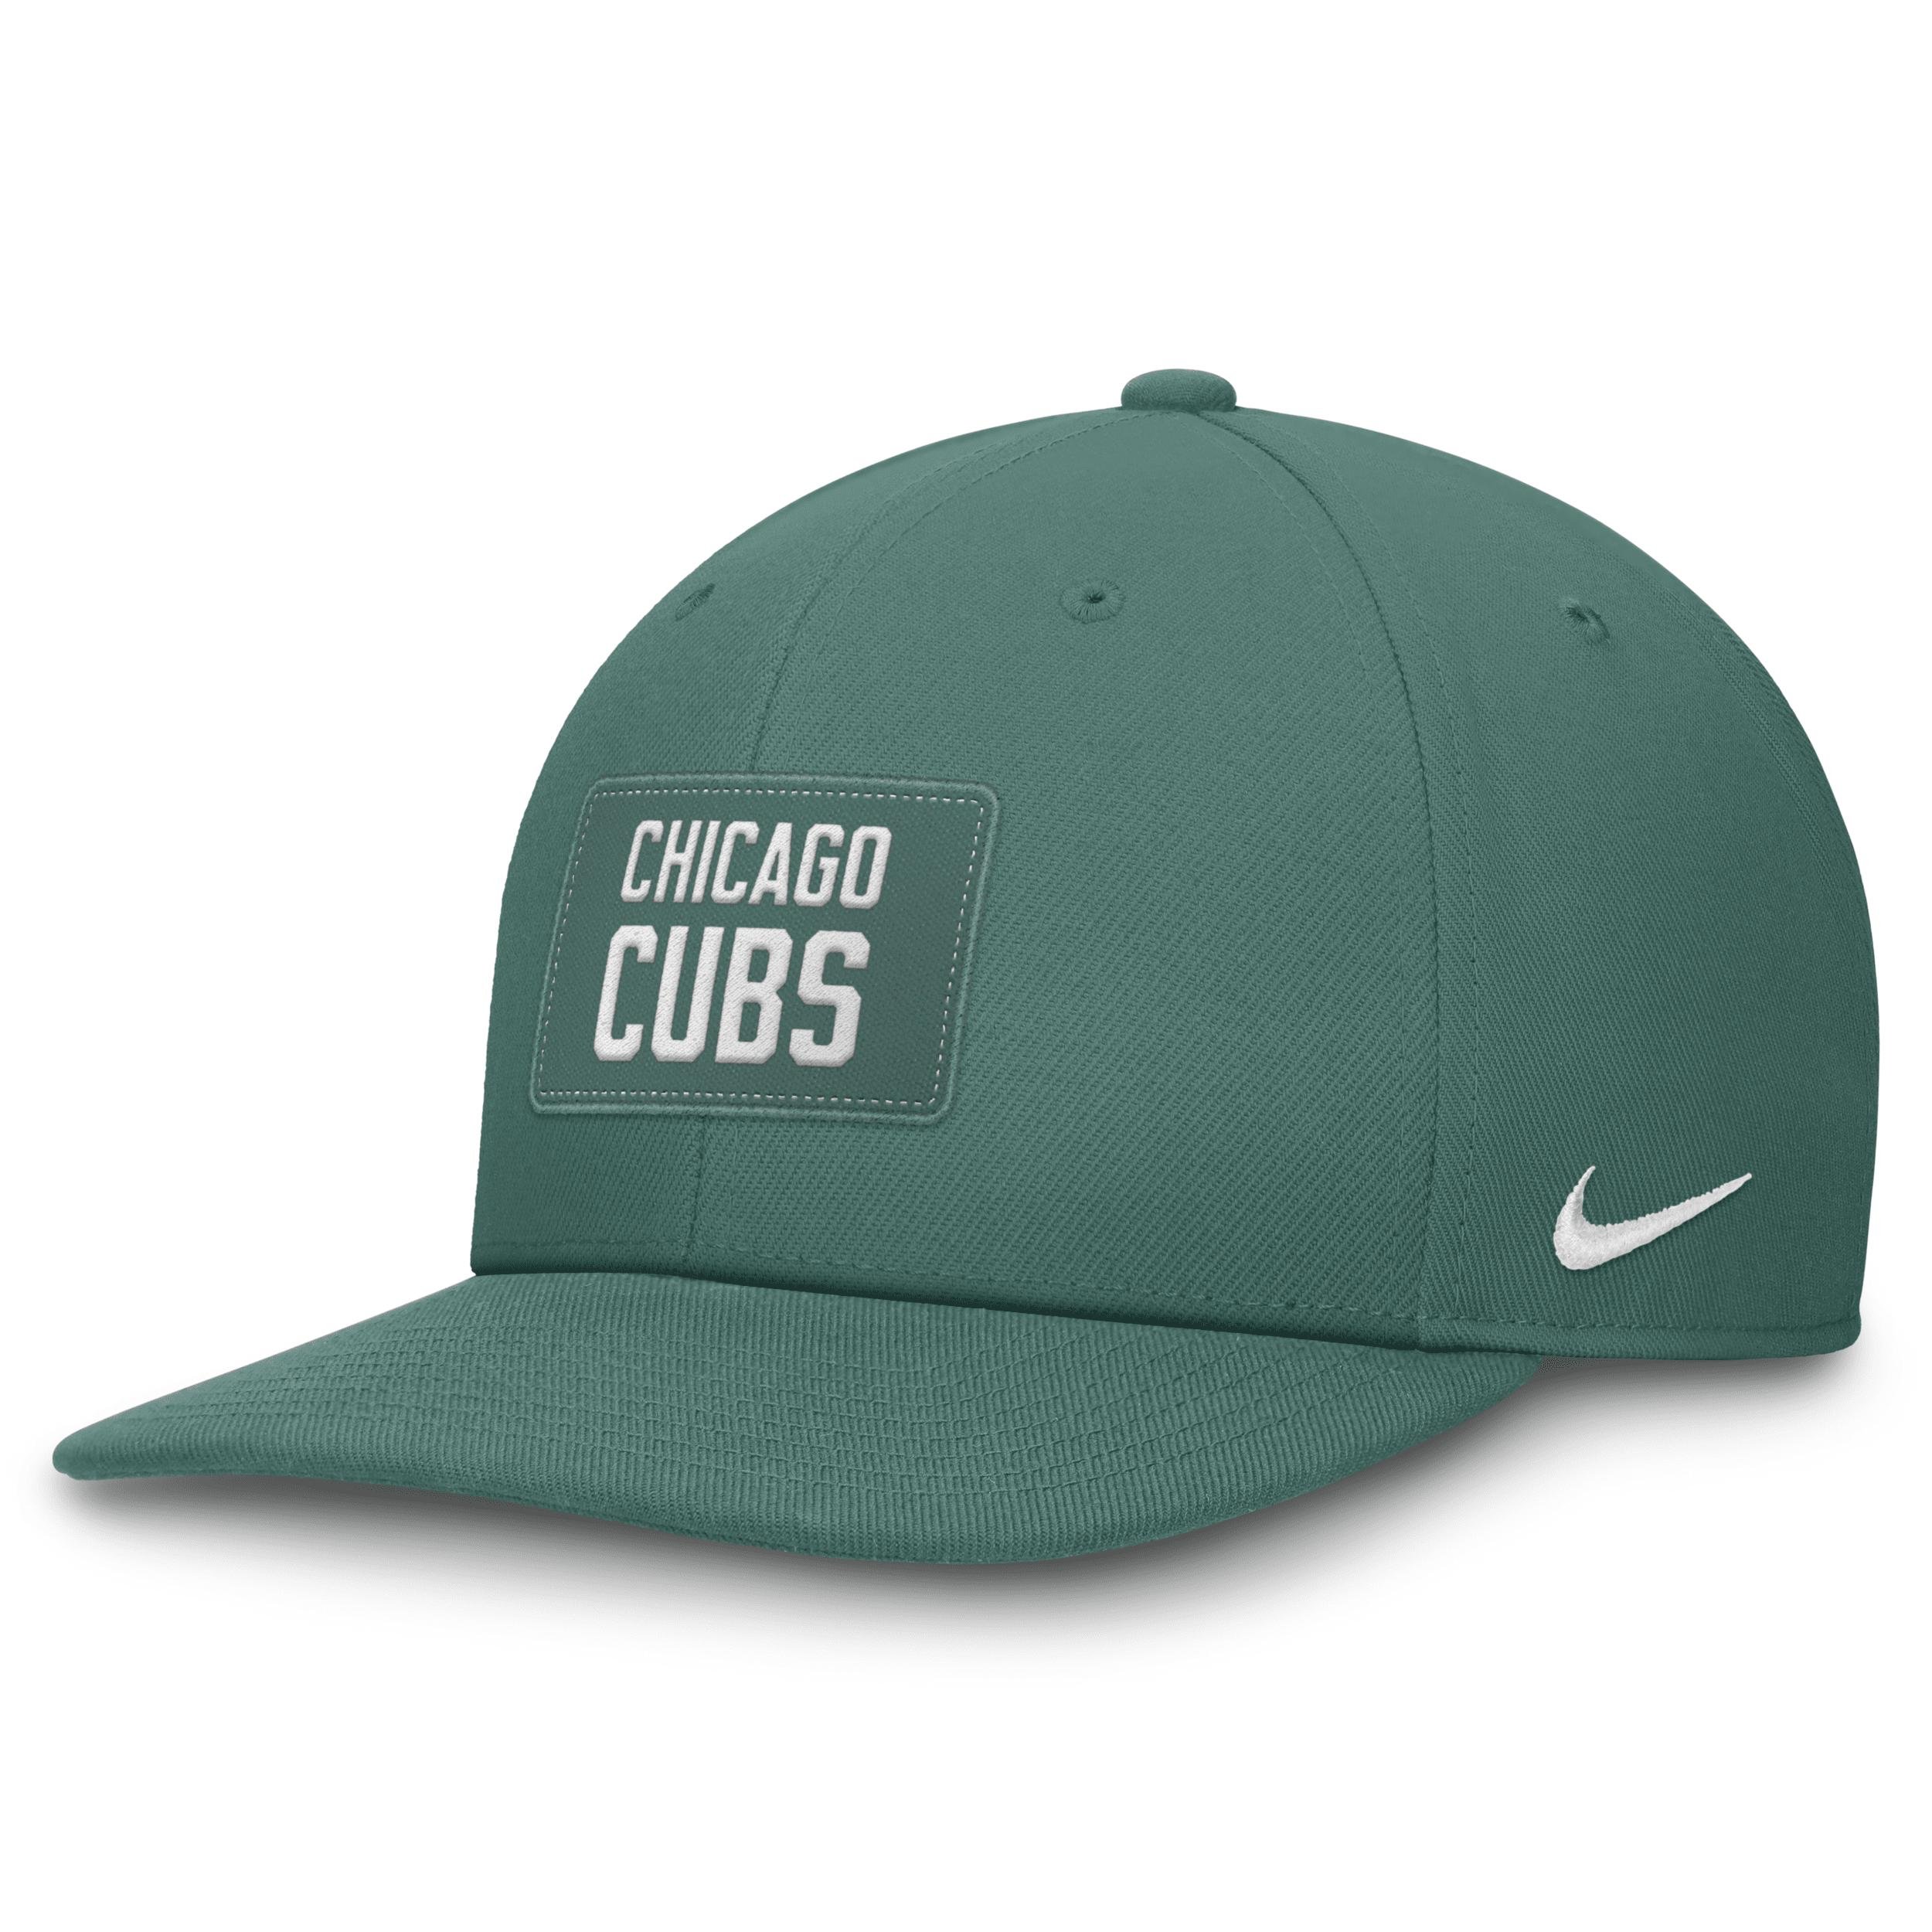 Chicago Cubs Bicoastal Pro Nike Unisex Dri-FIT MLB Adjustable Hat by NIKE